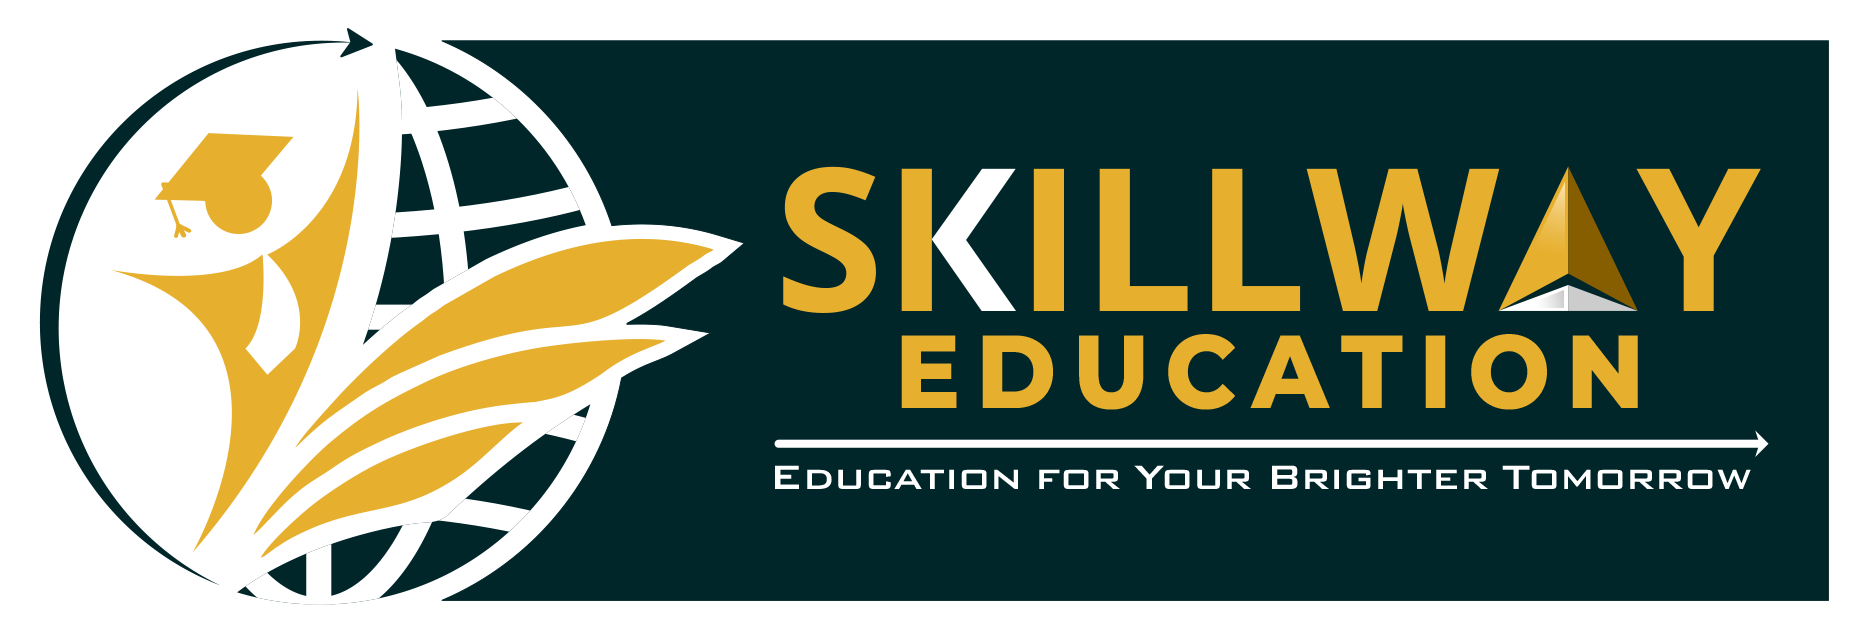 Skillway Education